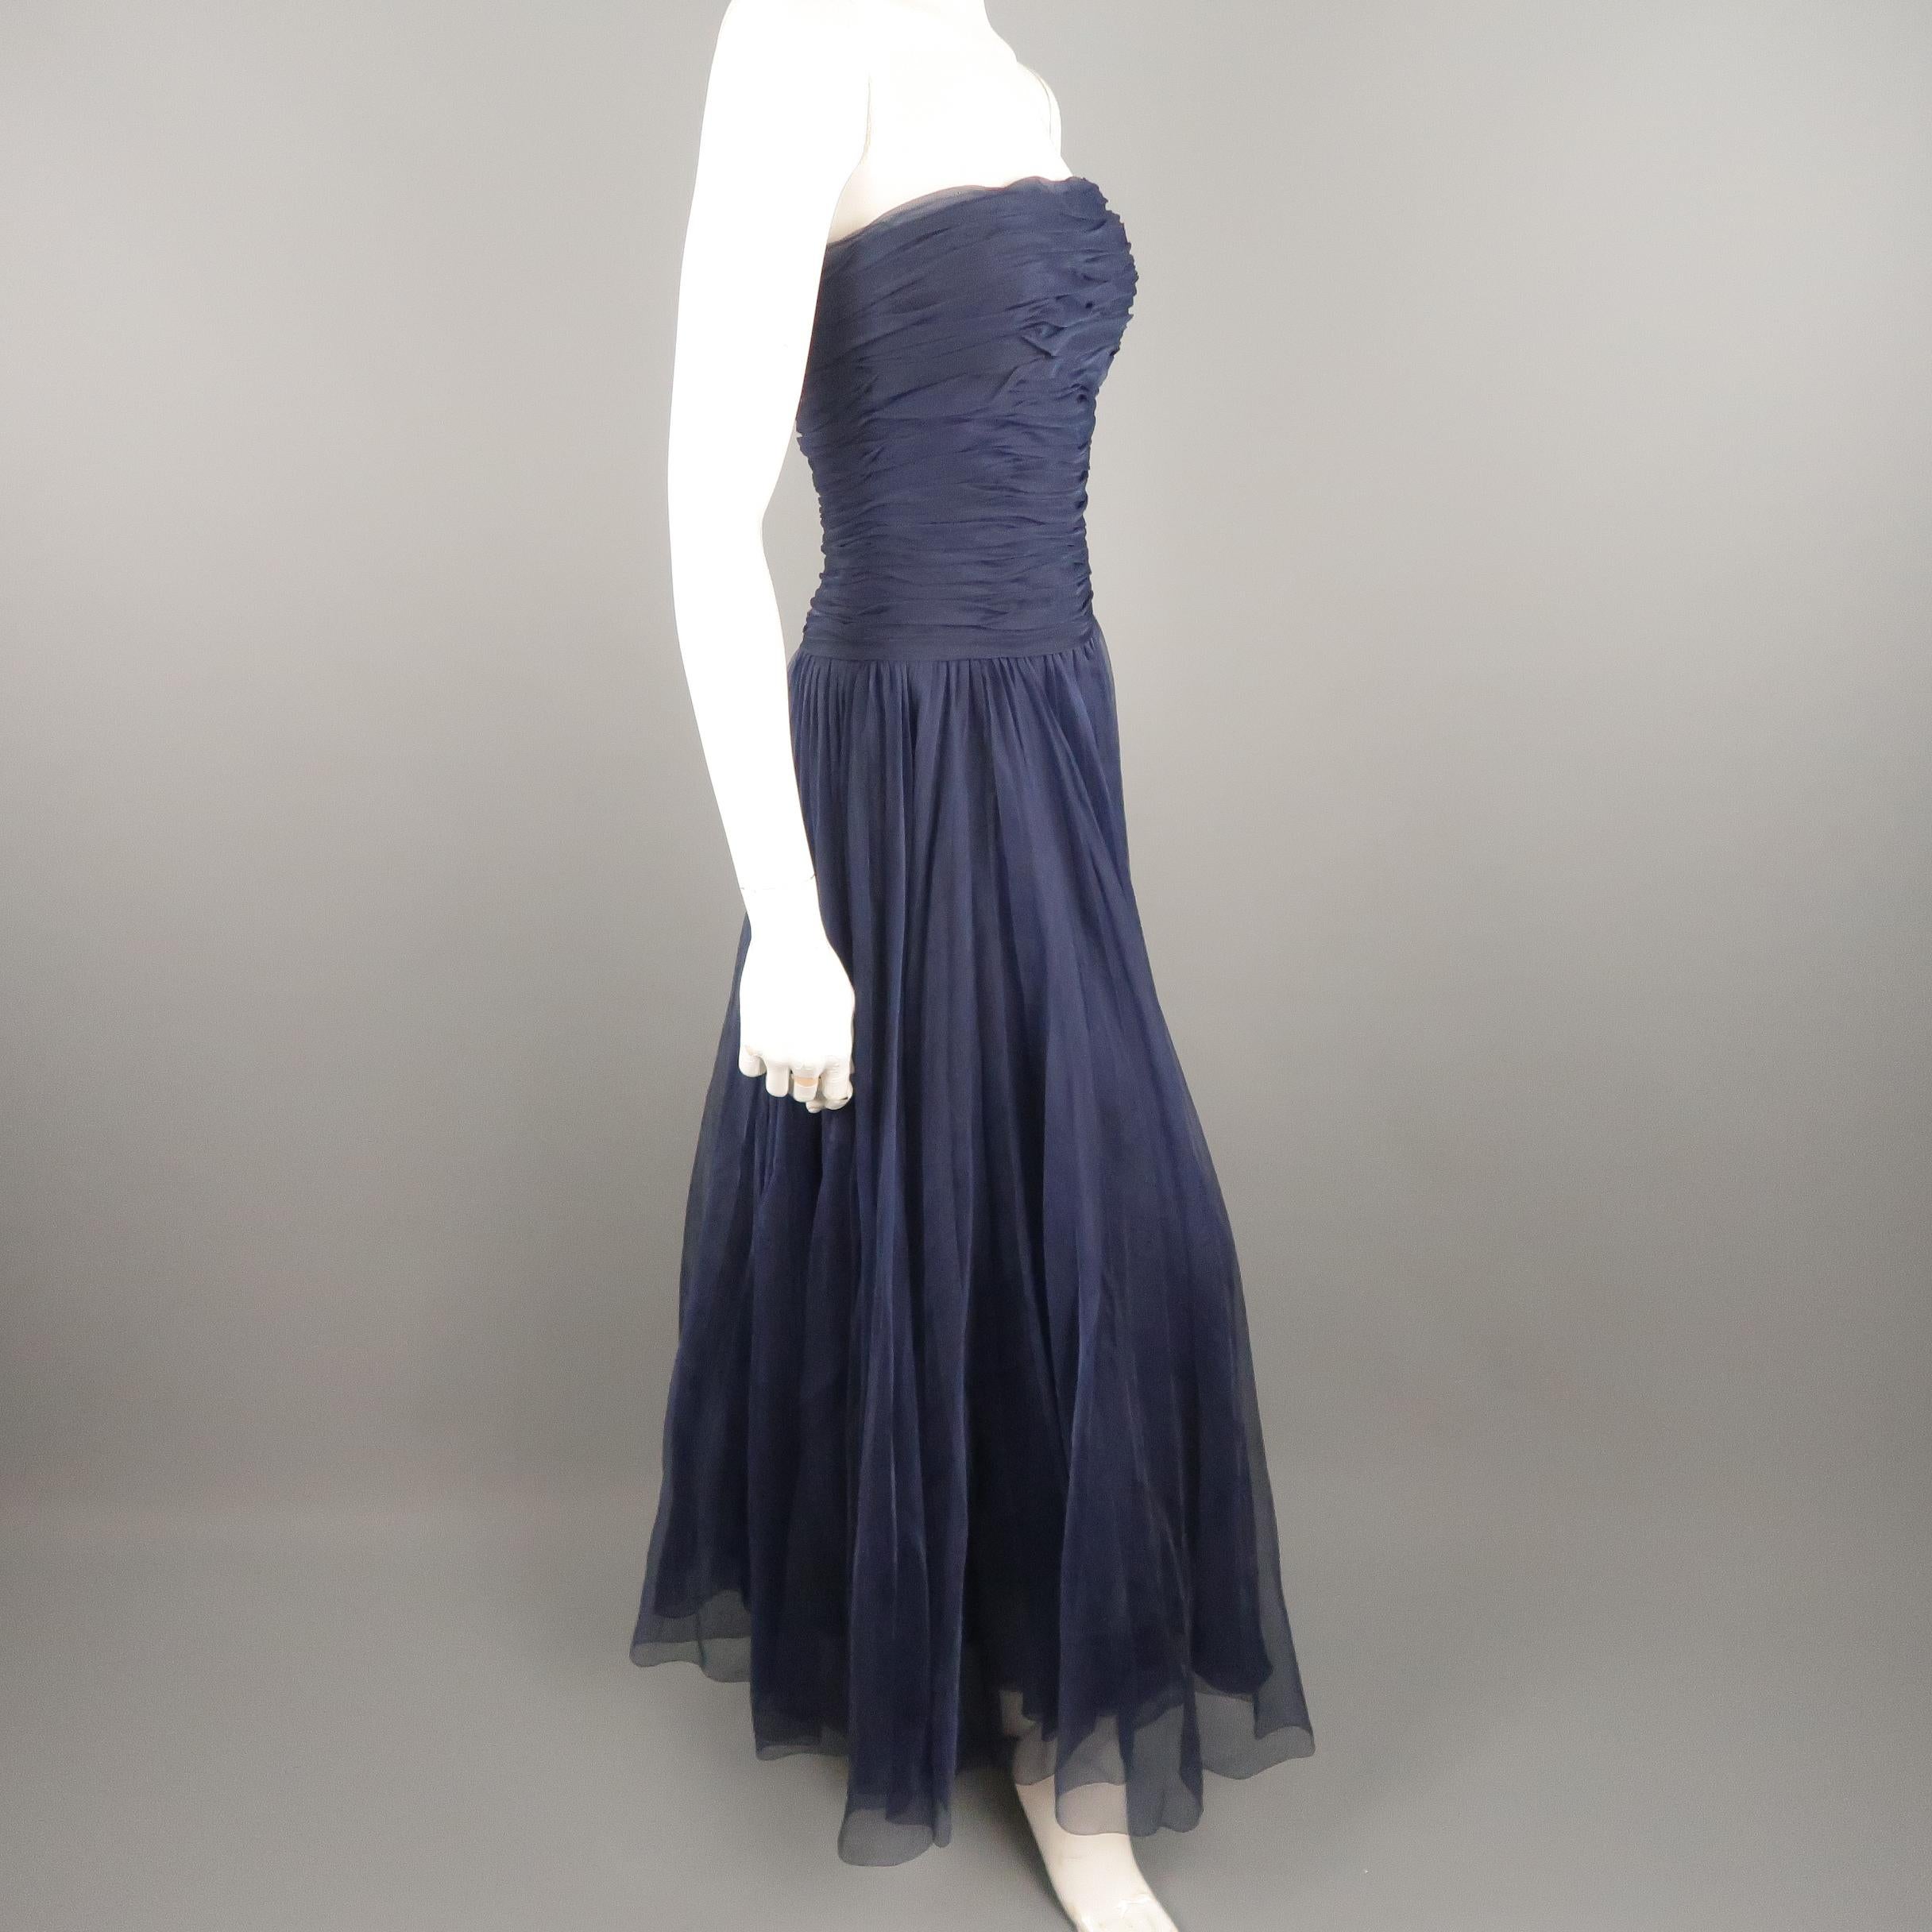 Black Vintage CHANEL Size US 8 / FR 40 Navy Gathered Silk Strapless Spring 1997 Dress